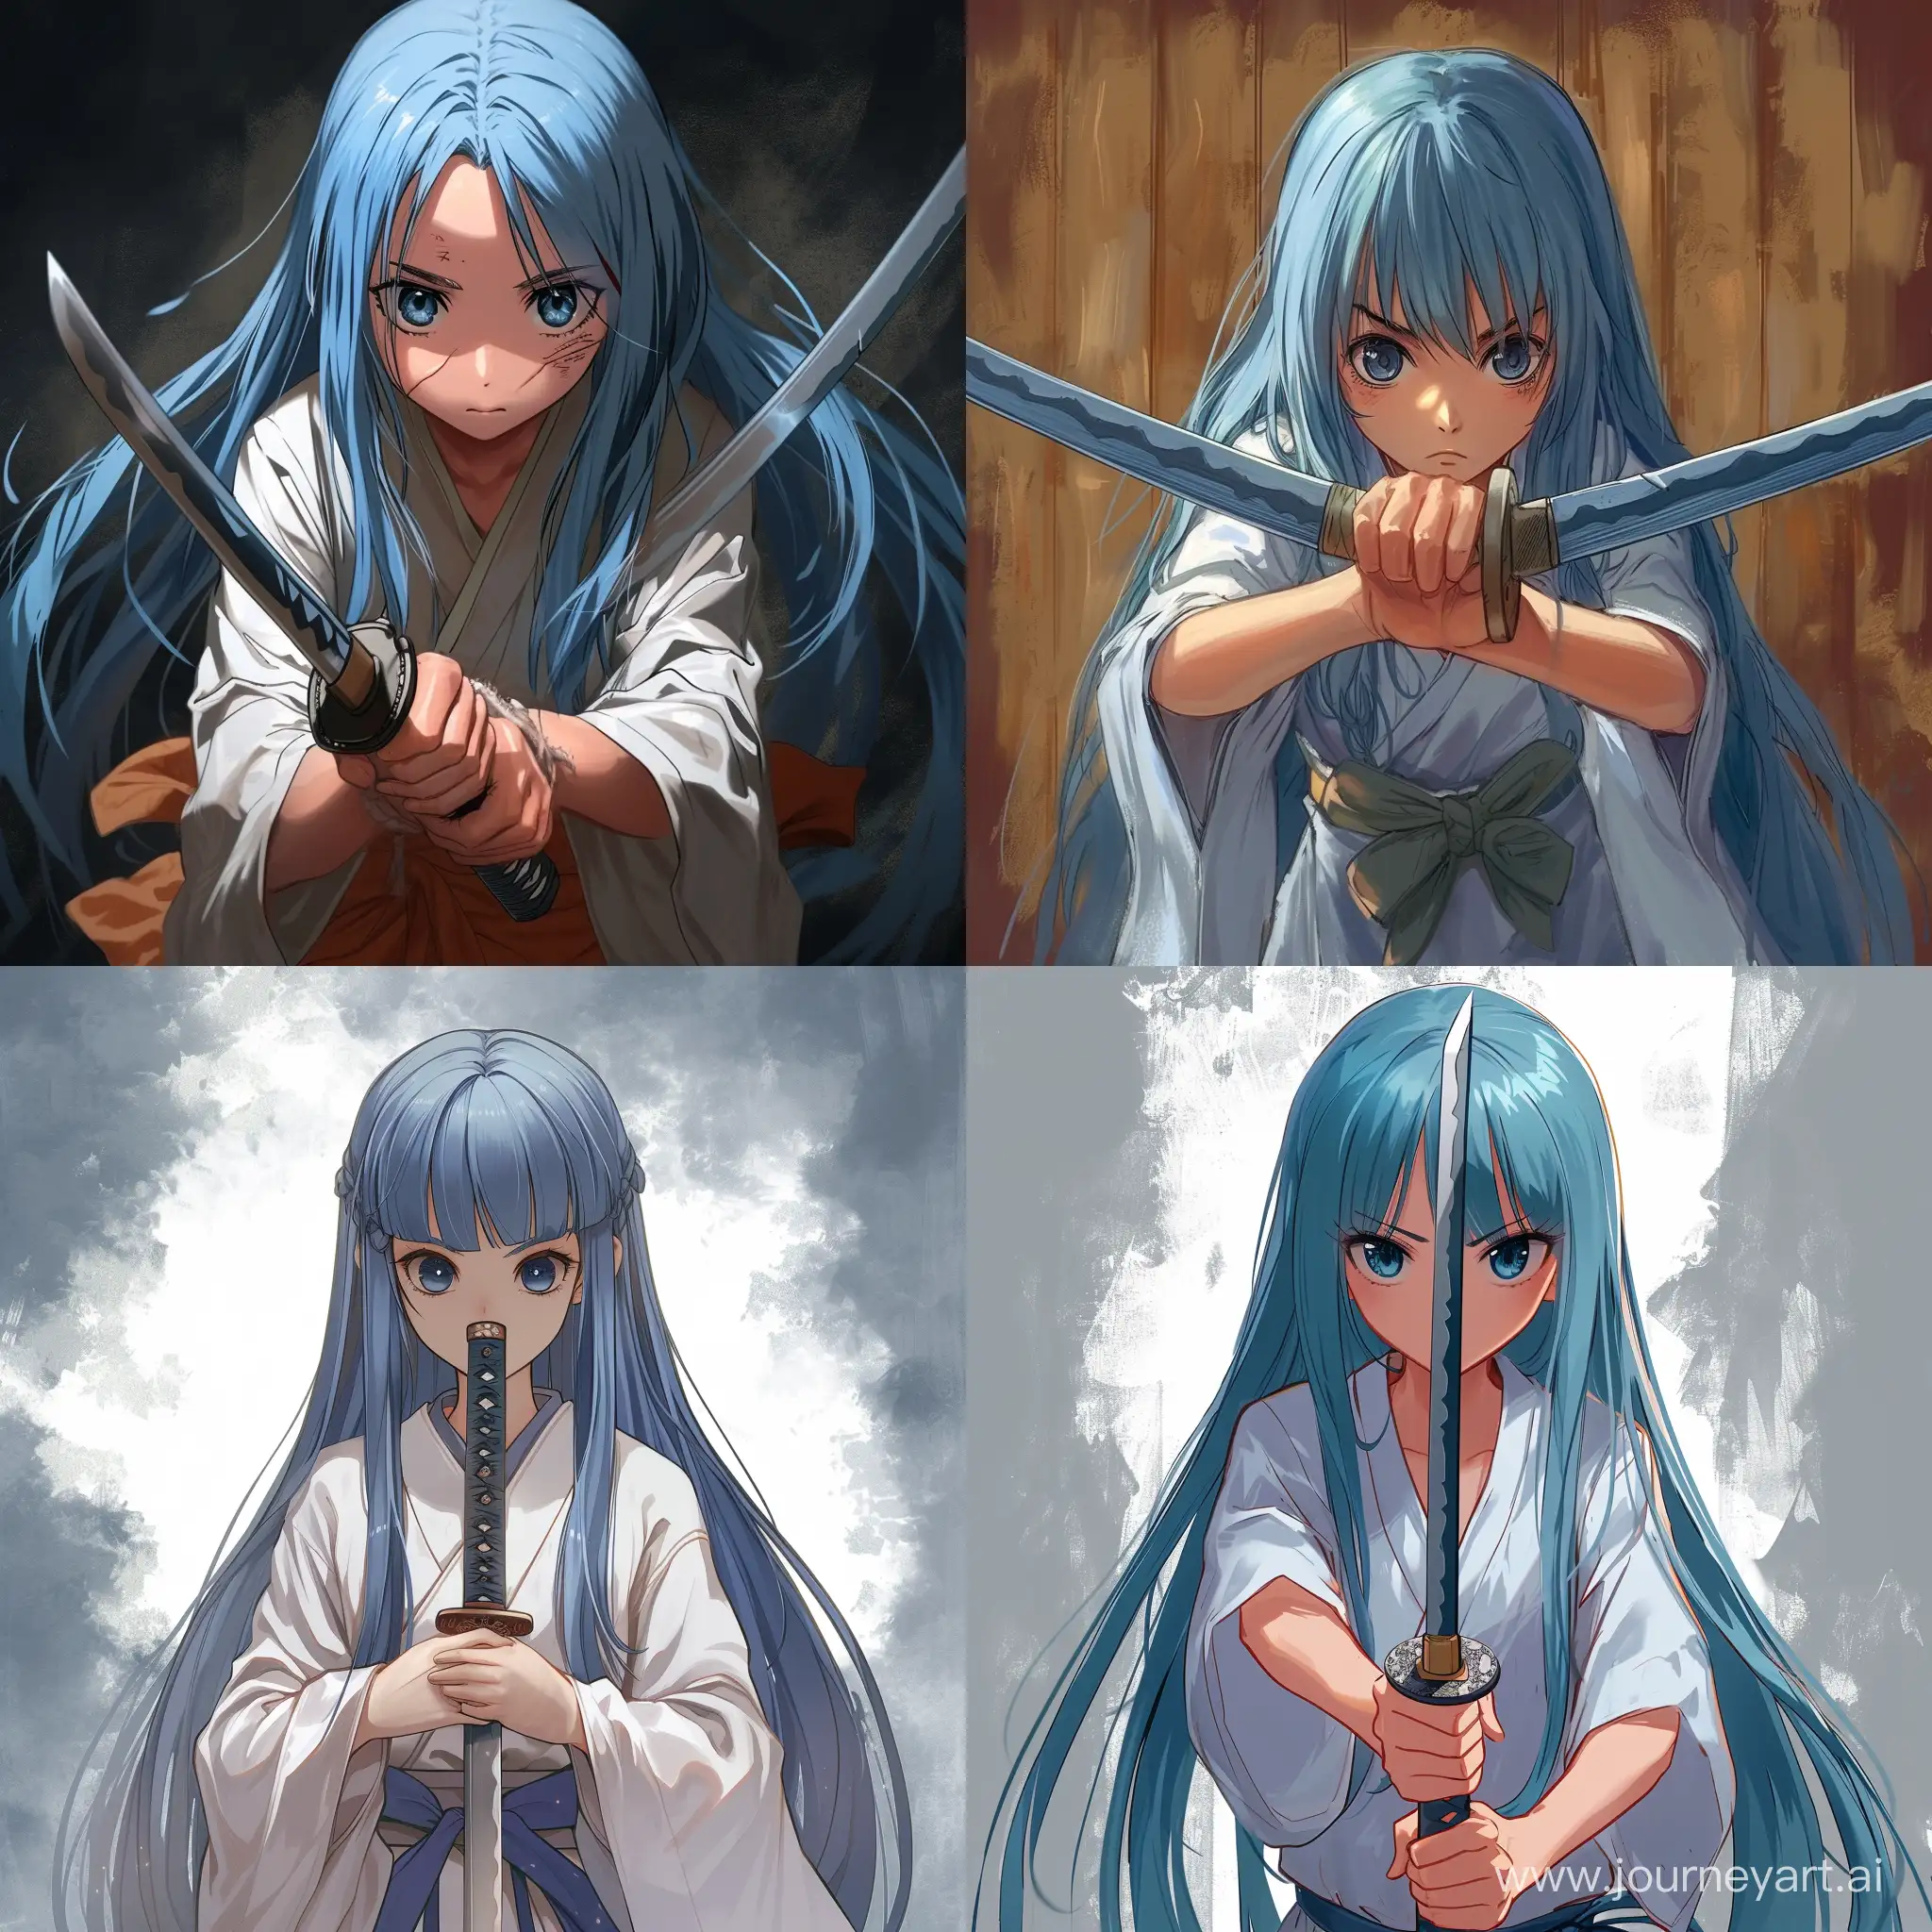 Ethereal-Warrior-with-Blue-Hair-Wielding-Katana